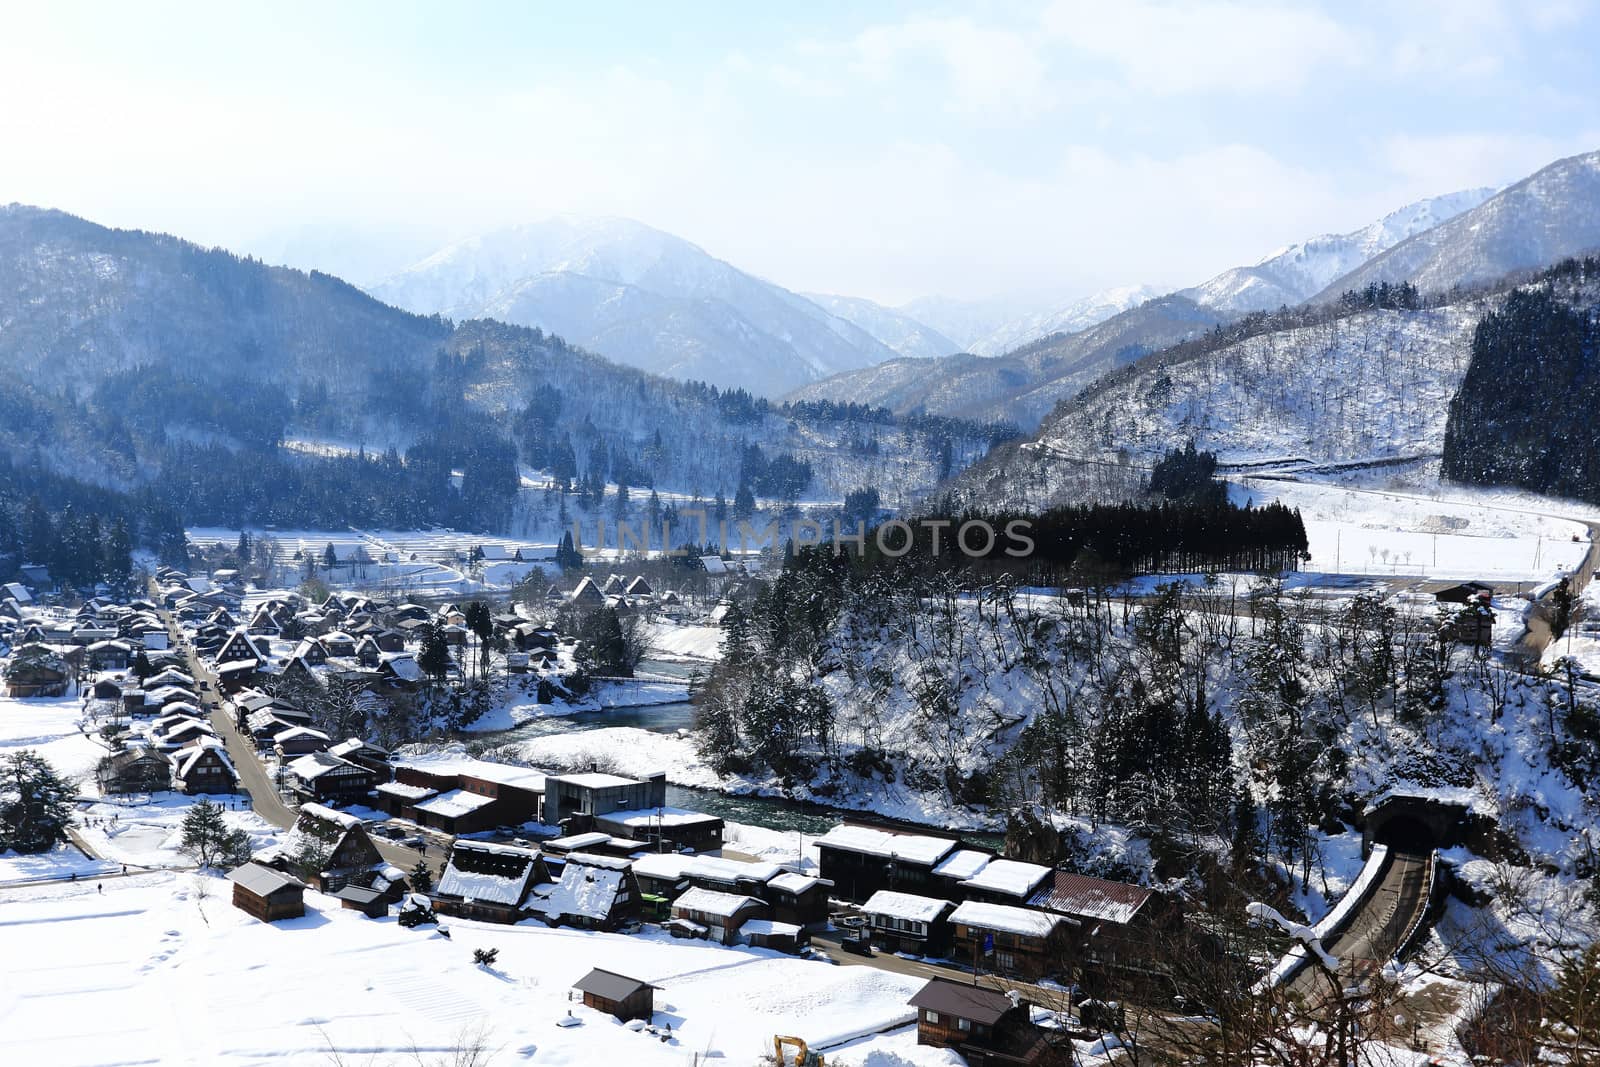 View from the Shiroyama Viewpoint at Gassho-zukuri Village, Shirakawago, Japan